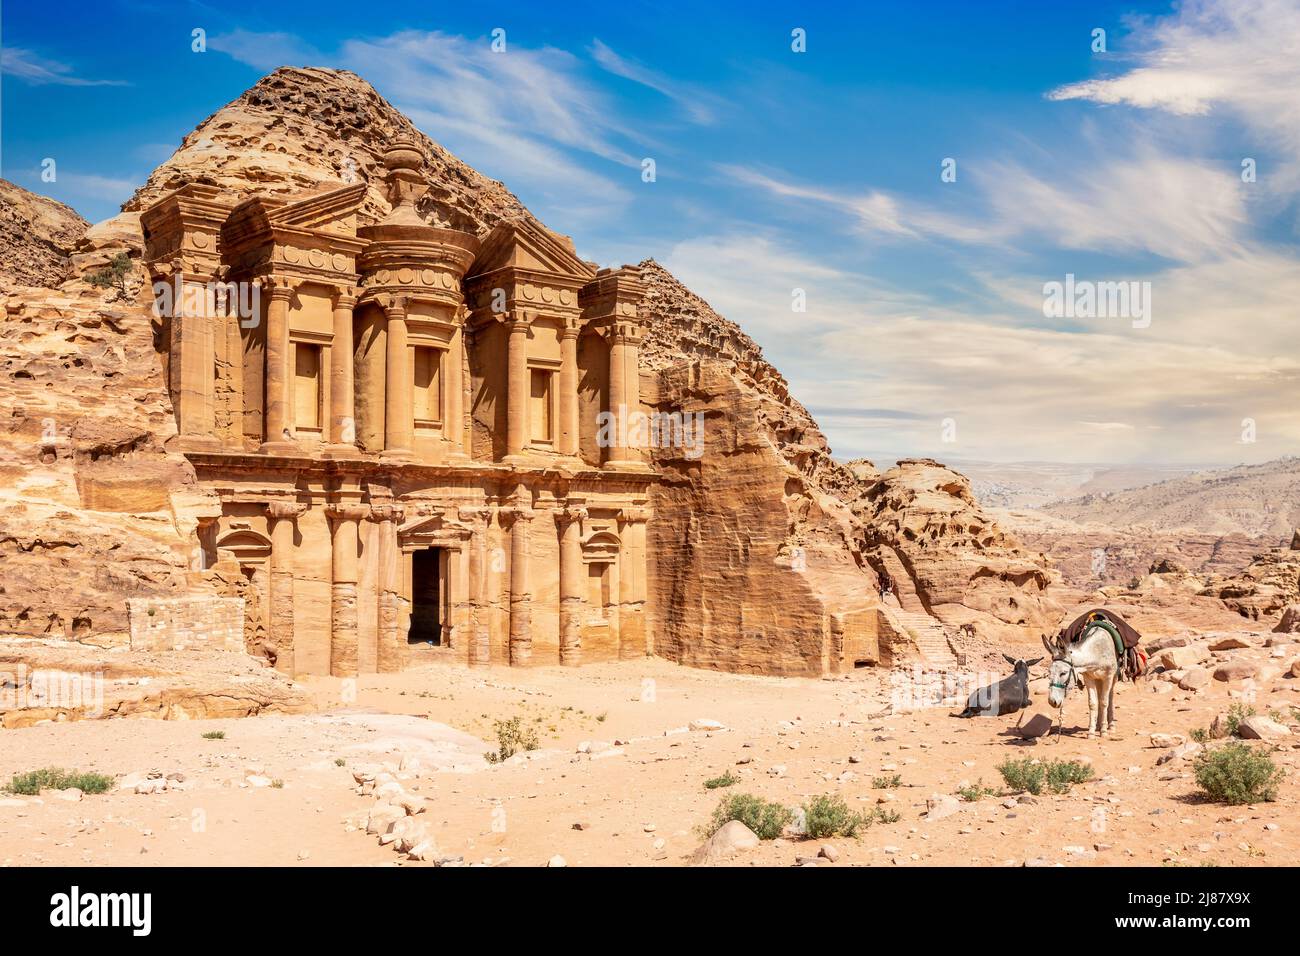 Ad Deir o el Monasterio, antiguo templo de piedra Nabataea tallada, con burros en primer plano, Petra, Jordania Foto de stock